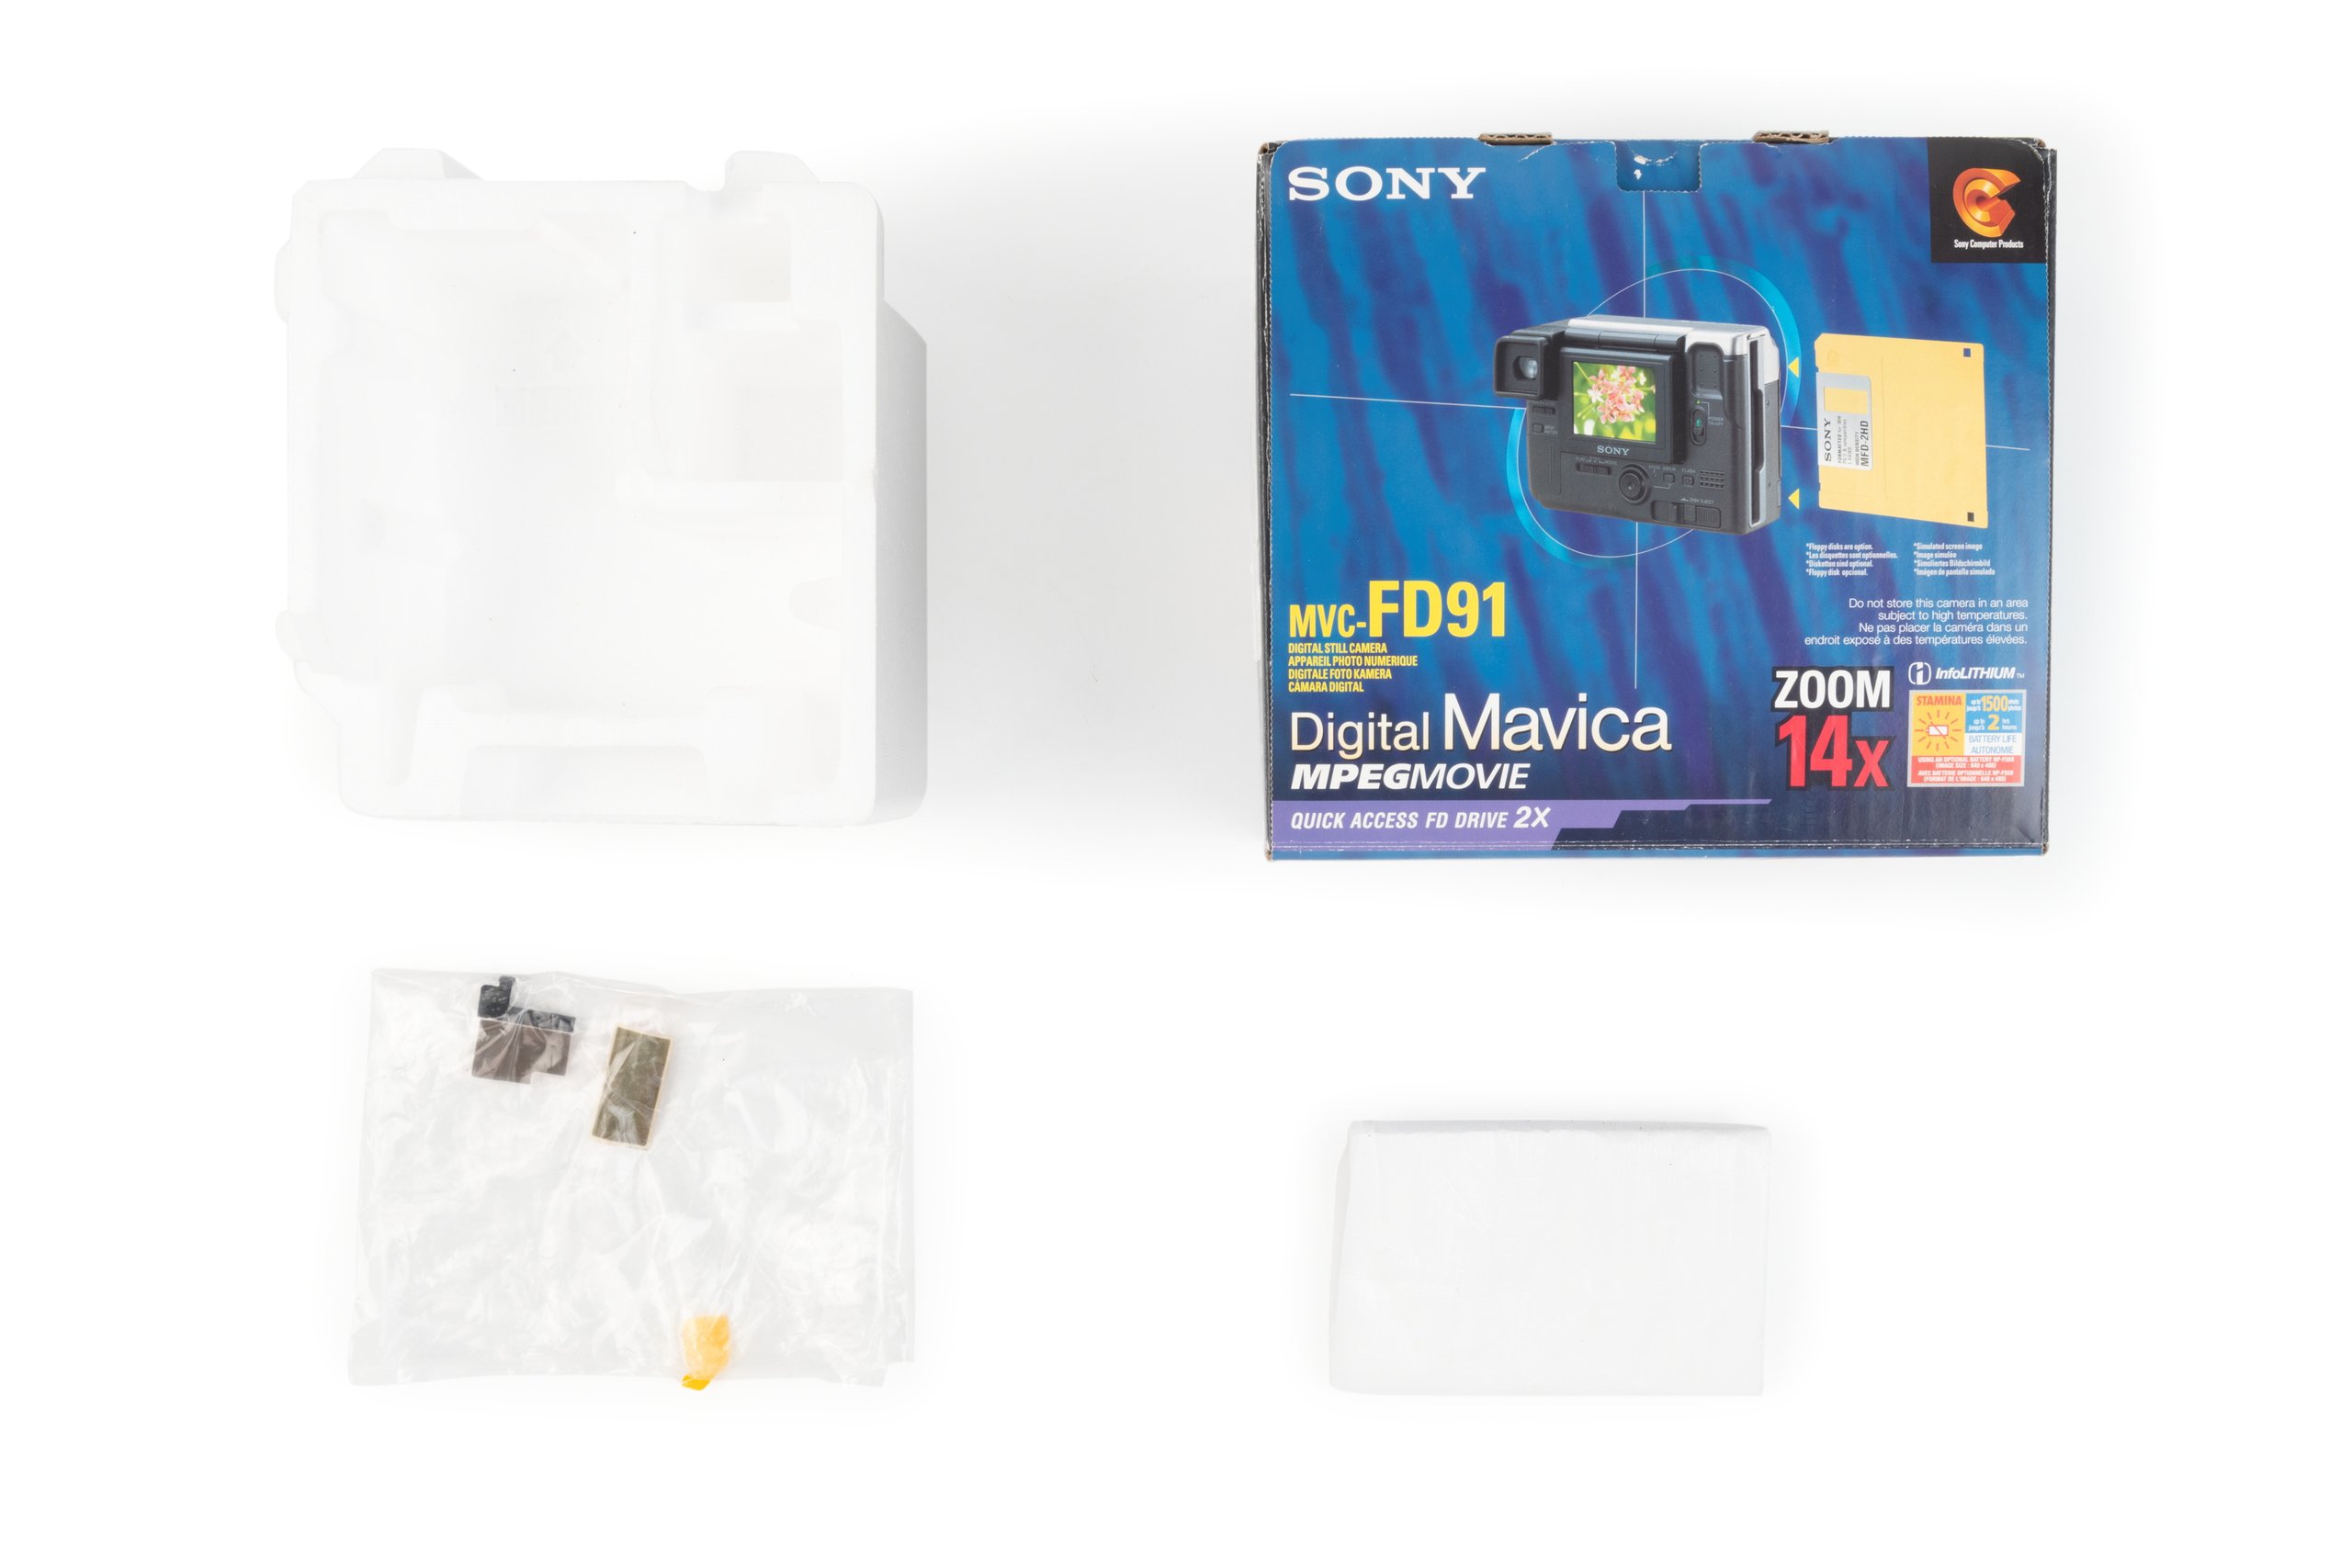 Sony Mavica FD-91 digital camera with packaging